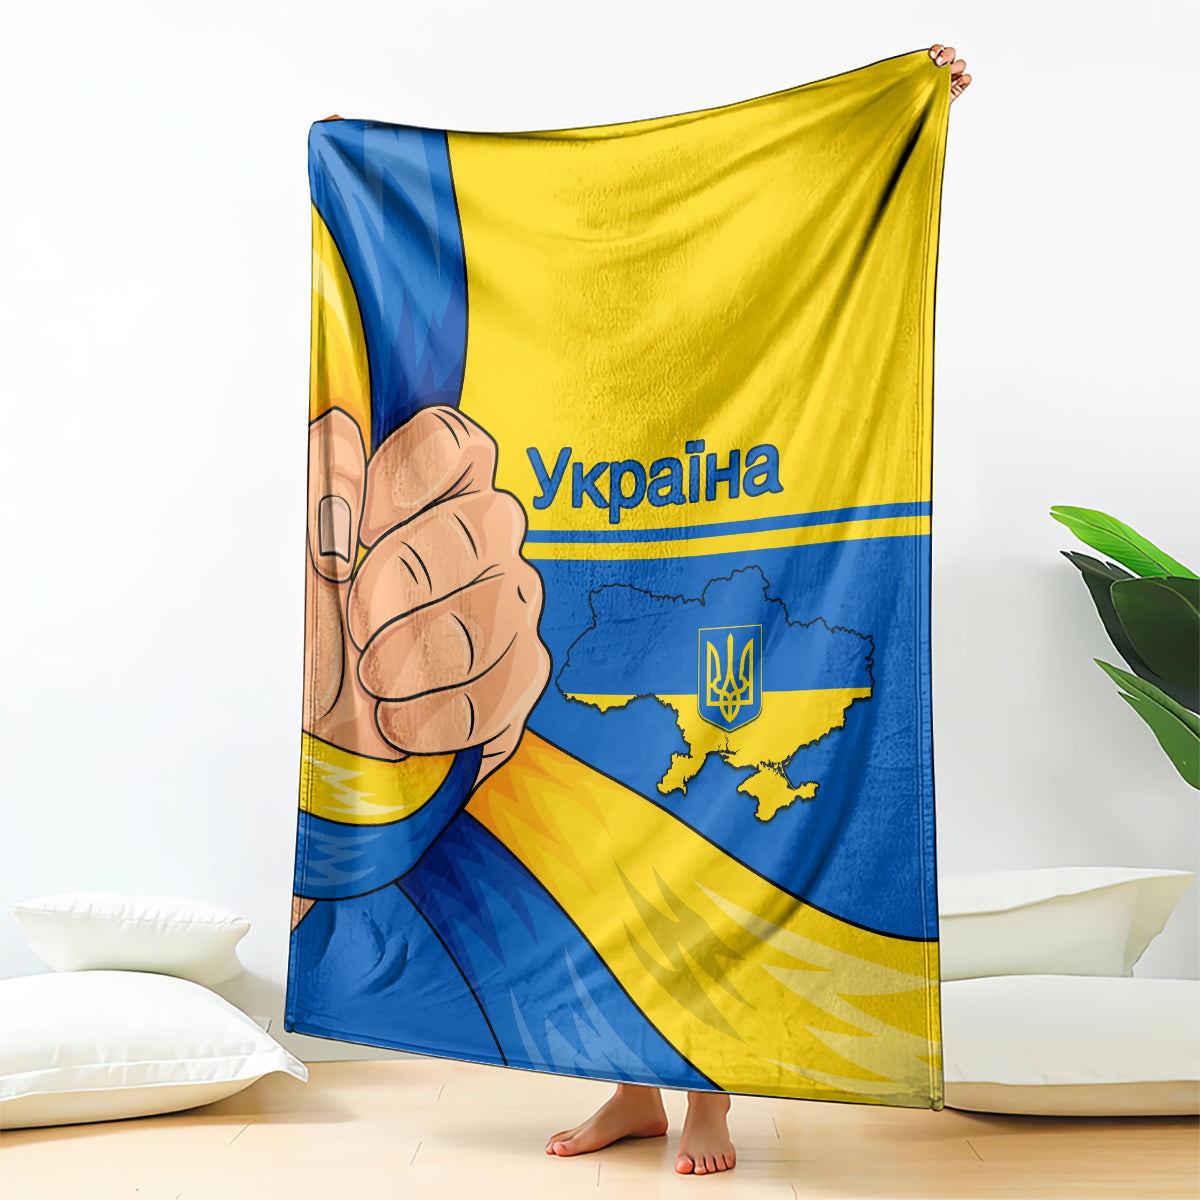 ukraine-unity-day-blanket-ukrainian-unification-act